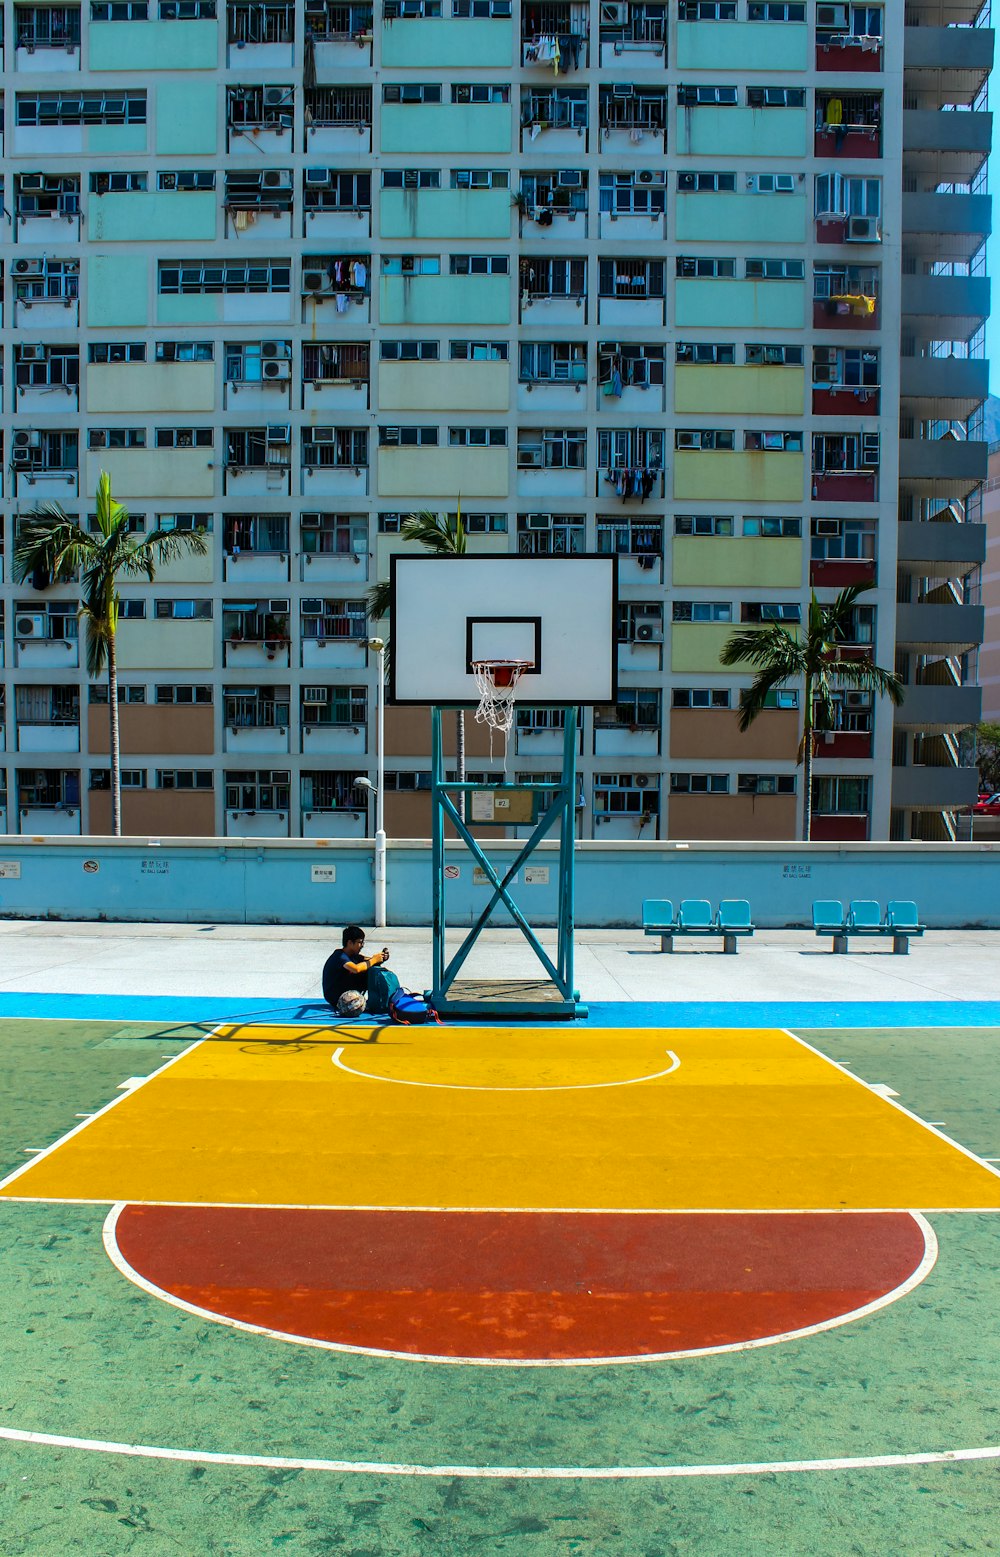 man sitting below basketball hoop near the building during daytime